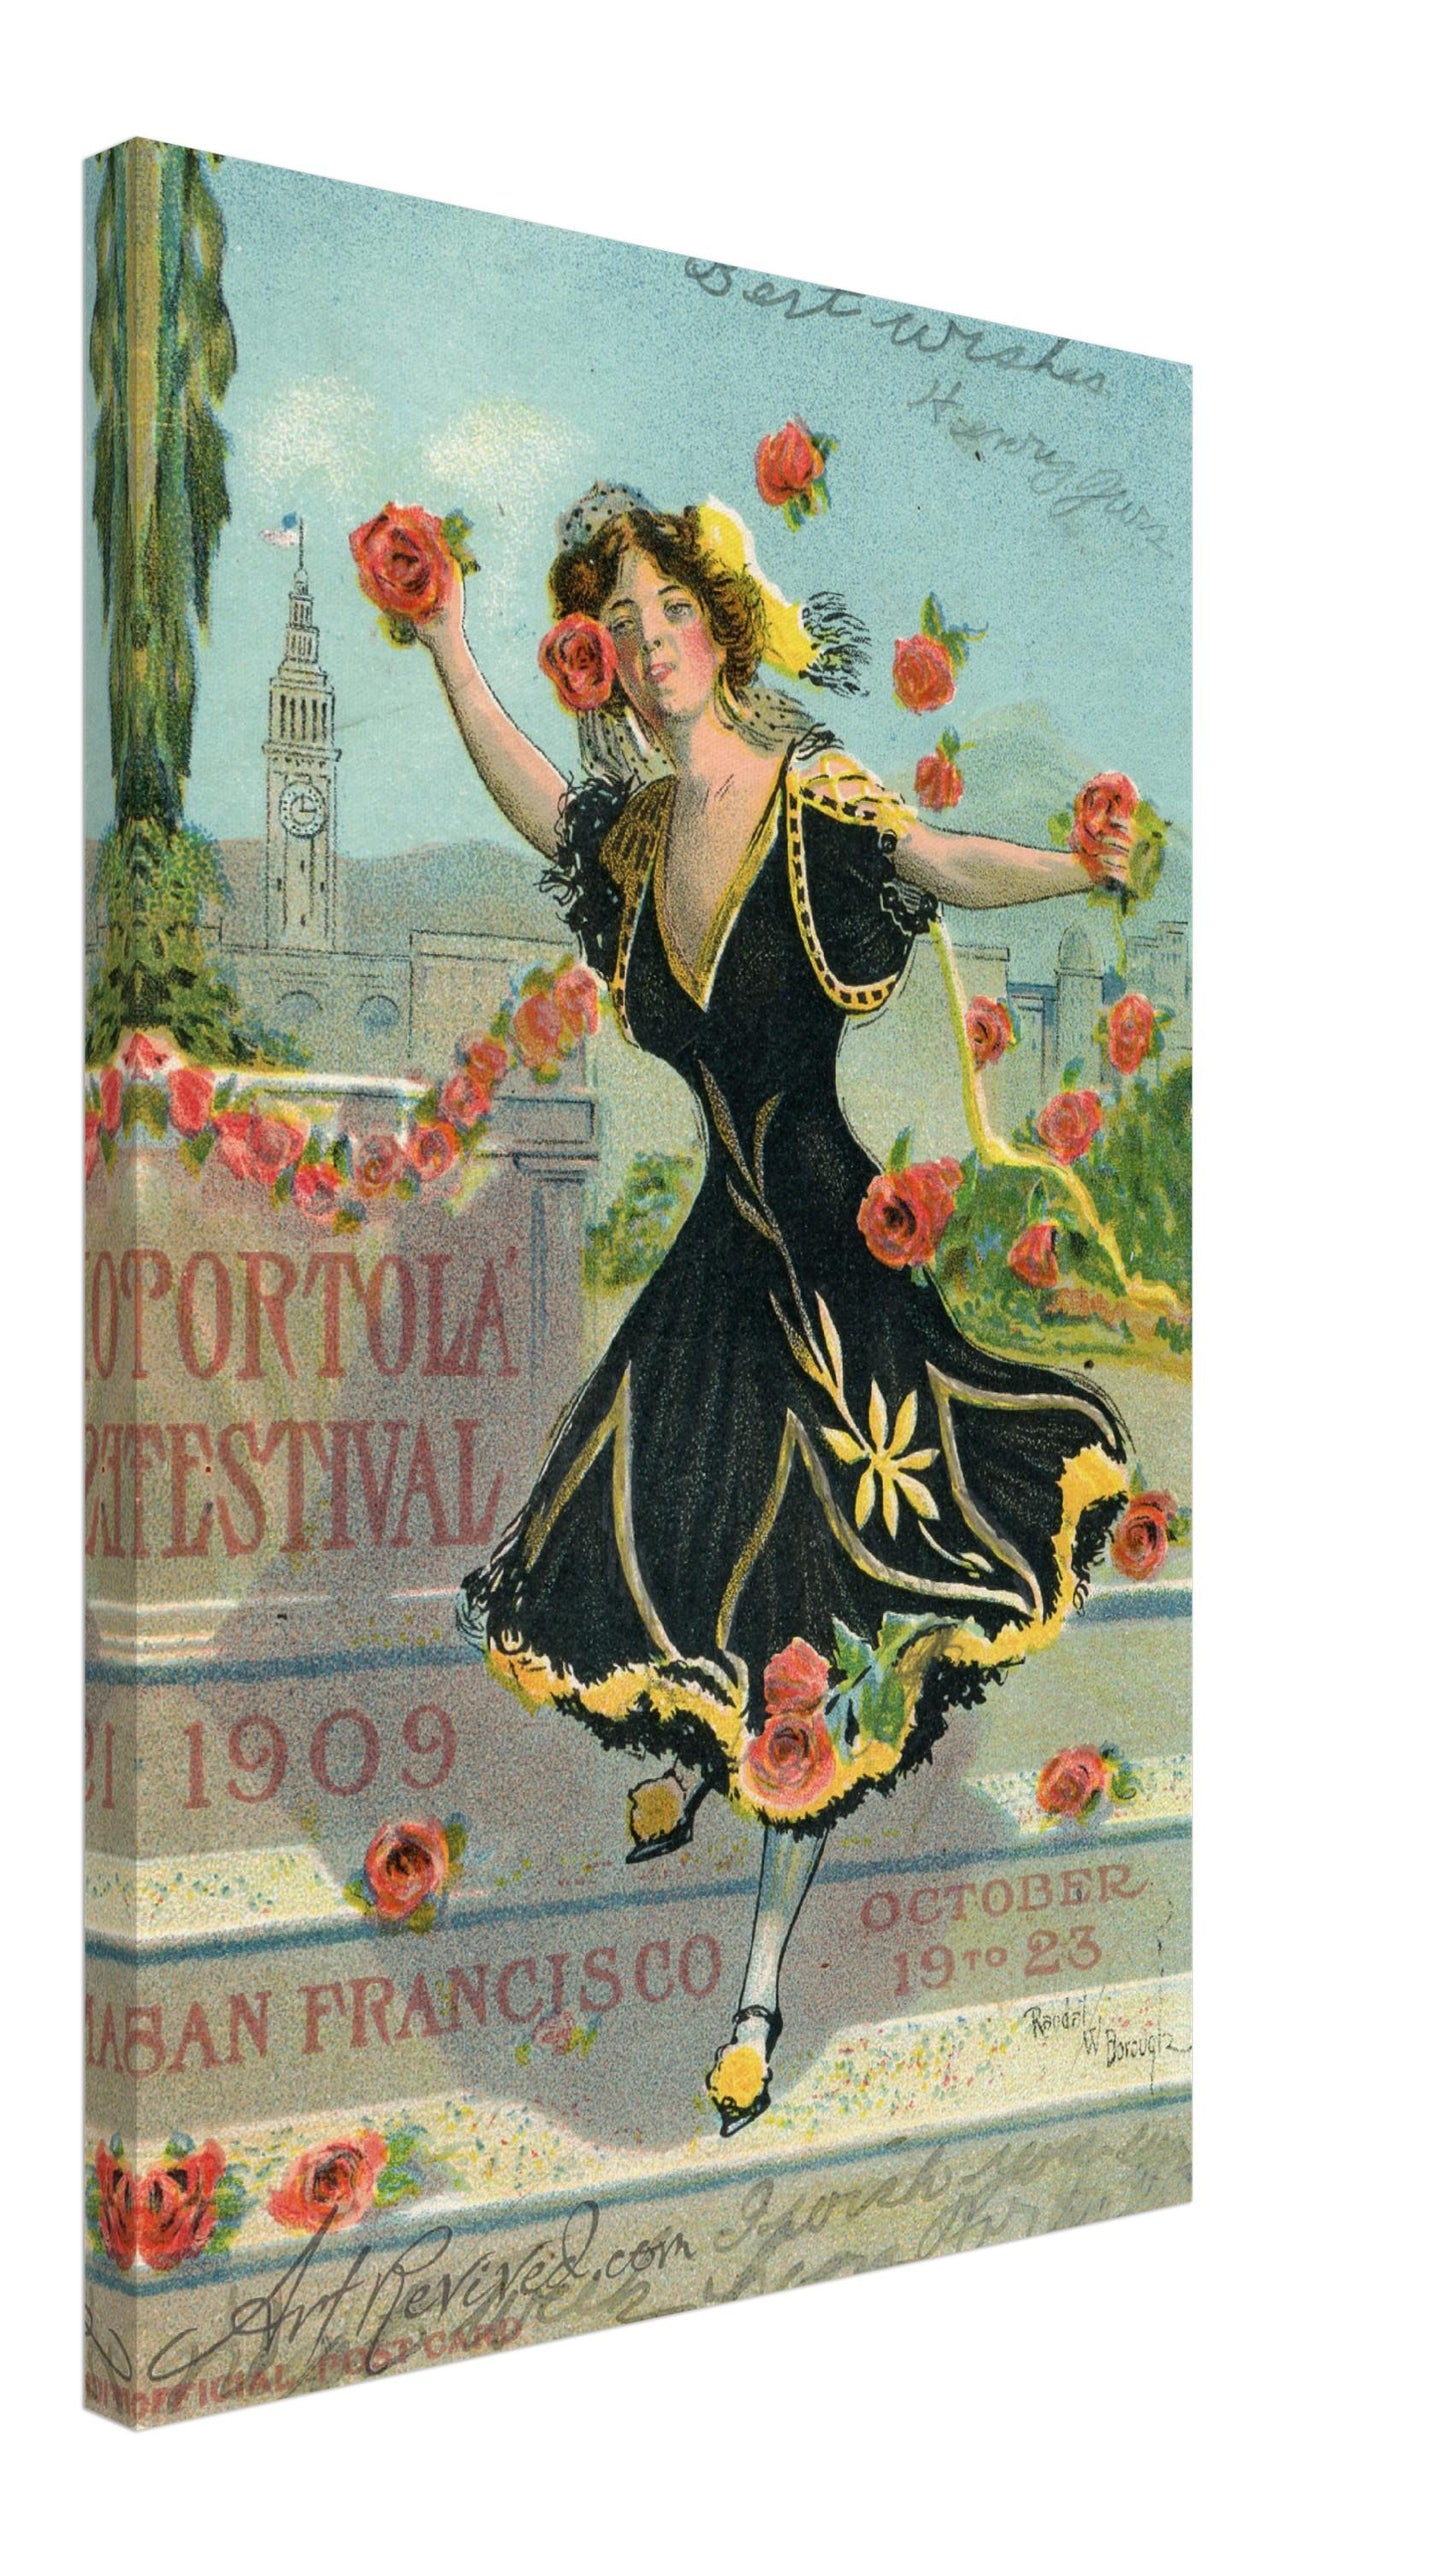 Portola Festival San Francisco Oct 1909  Throwing roses